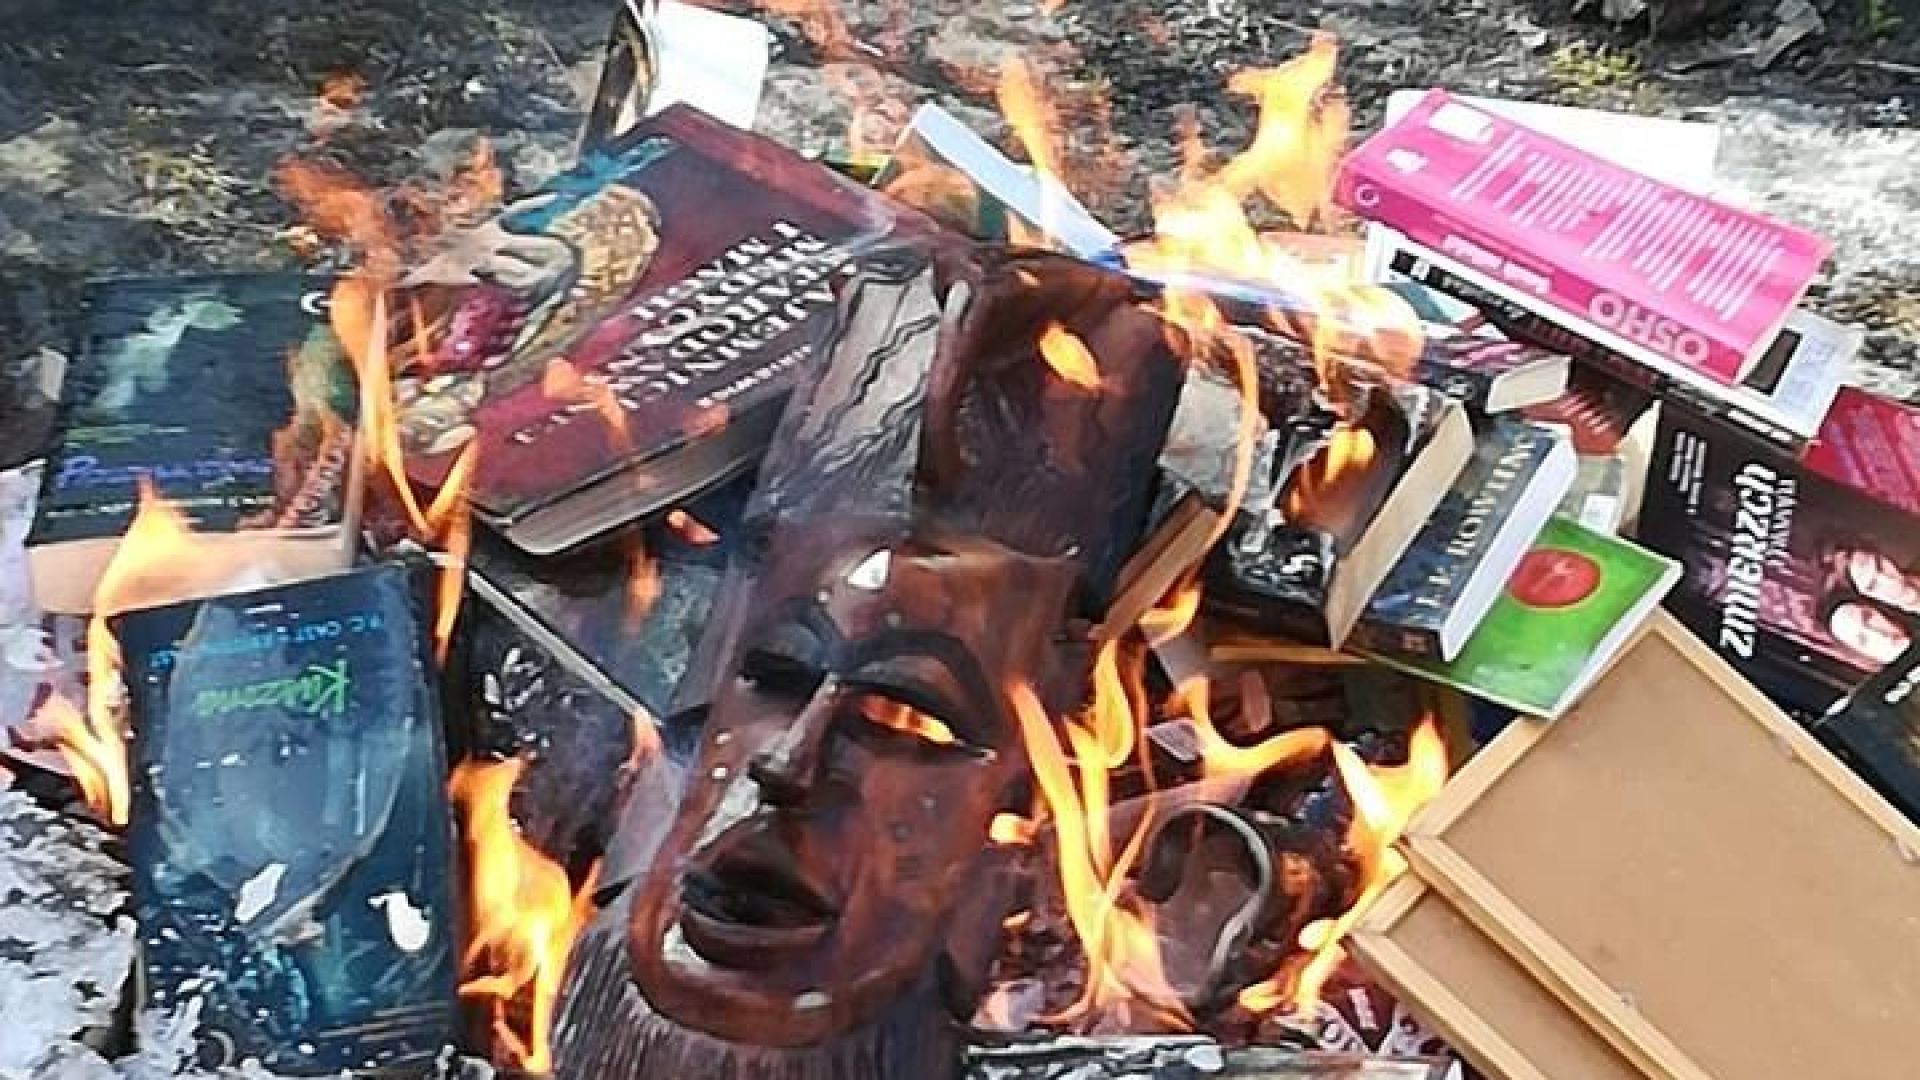 Католически свещеници в полския град Гданск изгориха книги, за които